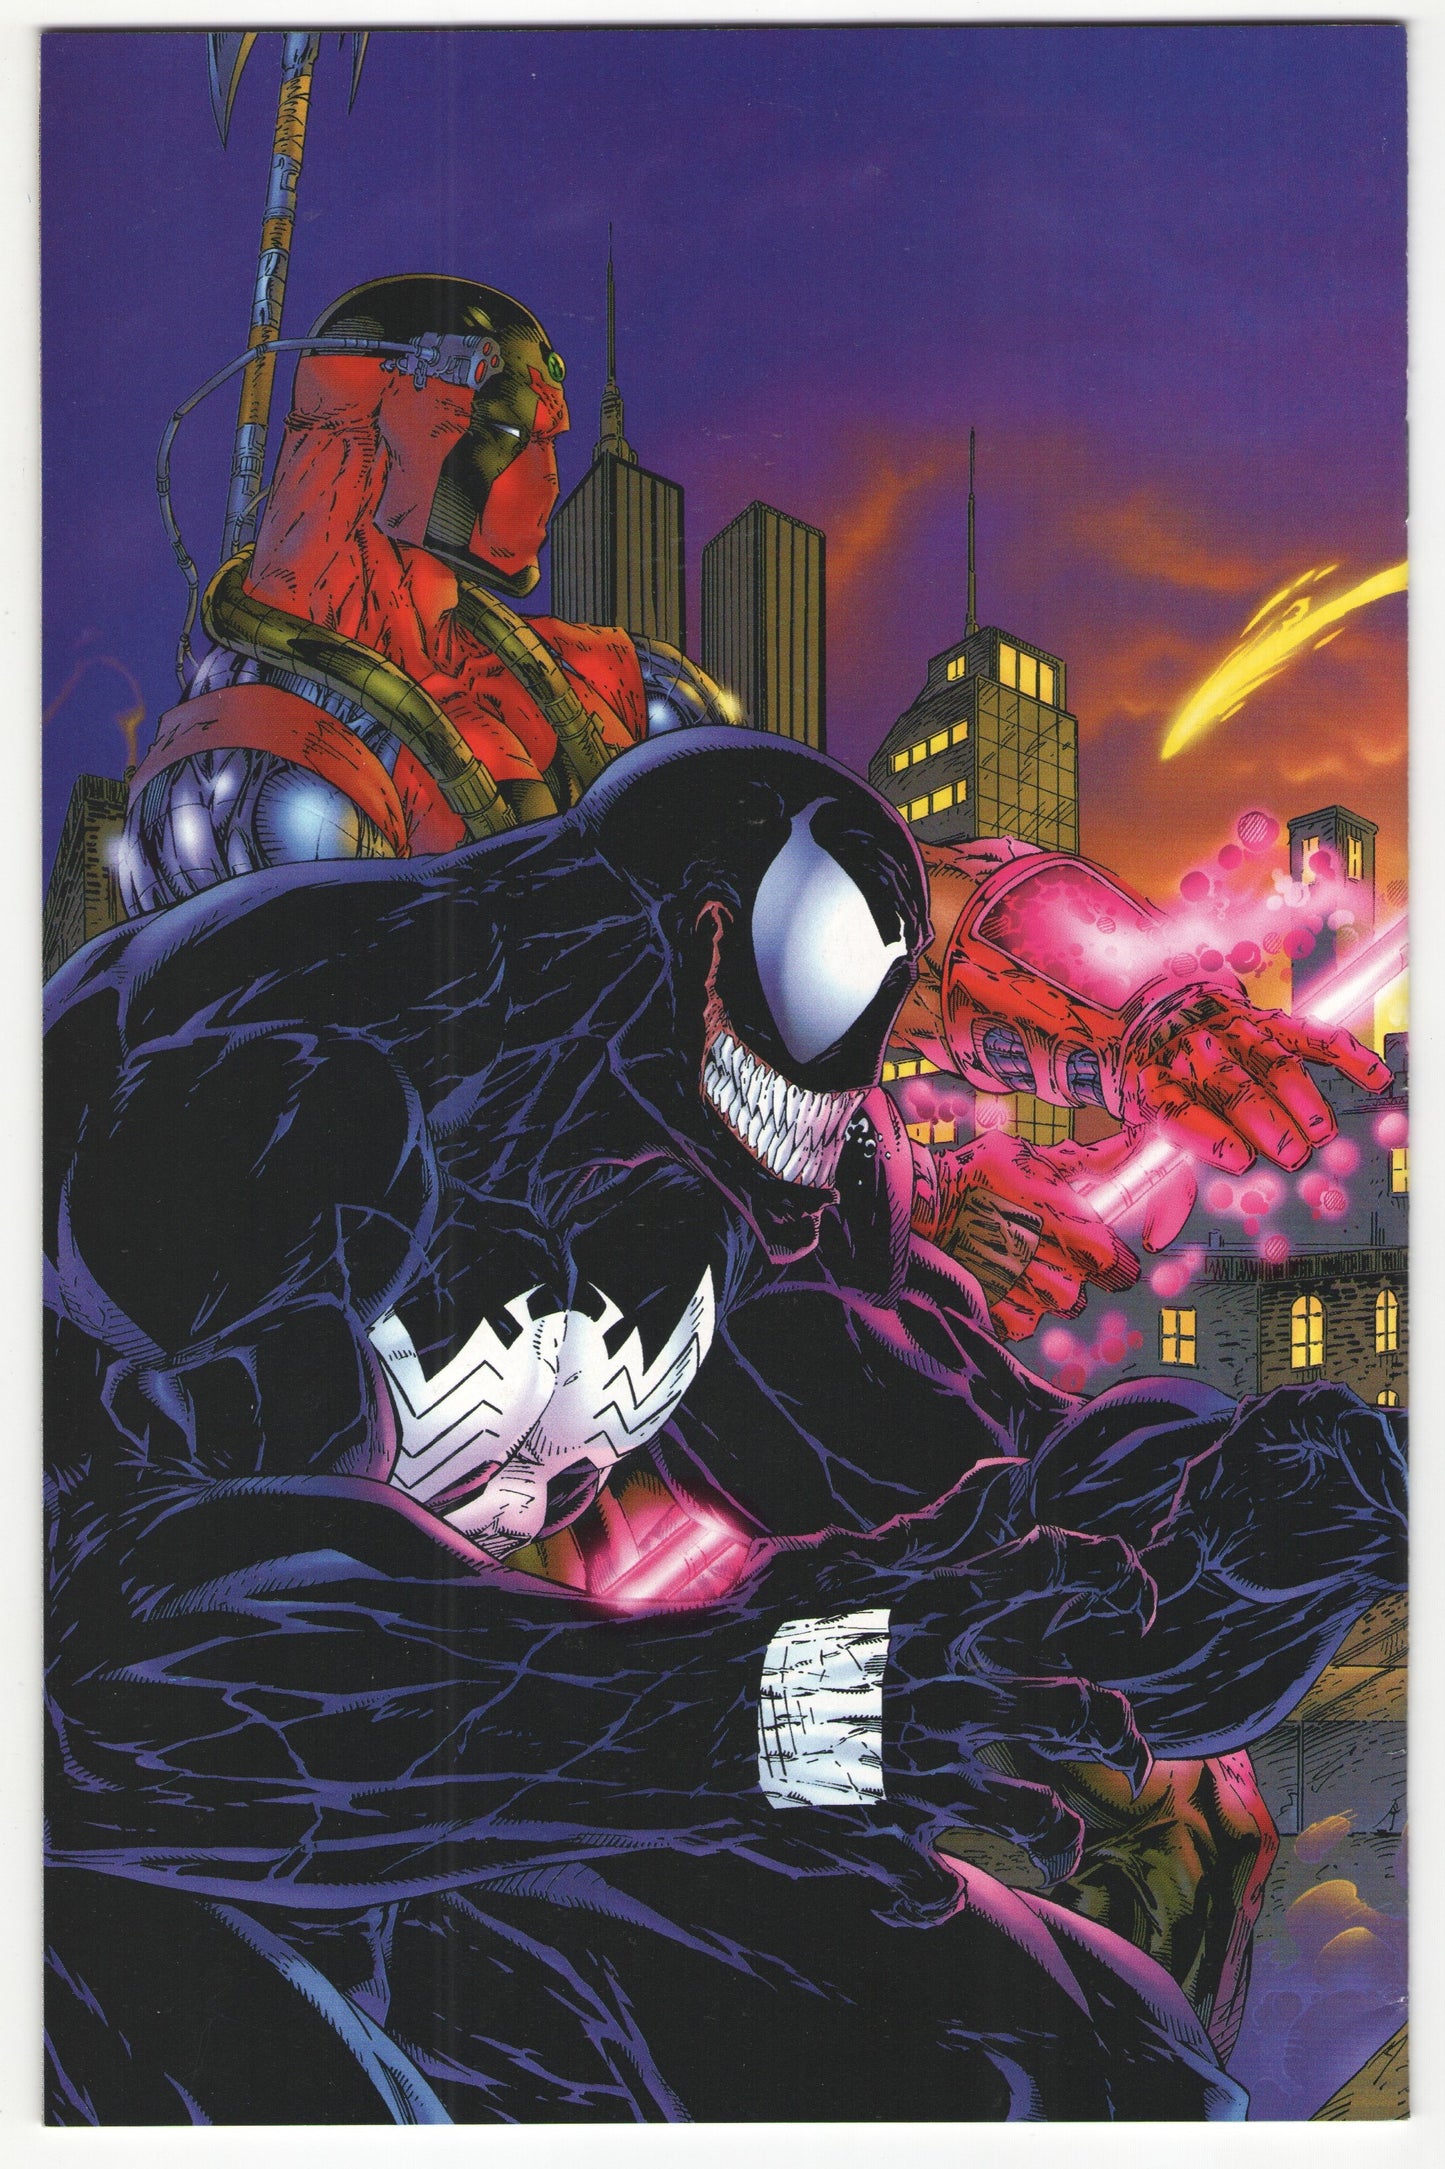 Backlash / Spider-Man Complete Limited Series (1996)